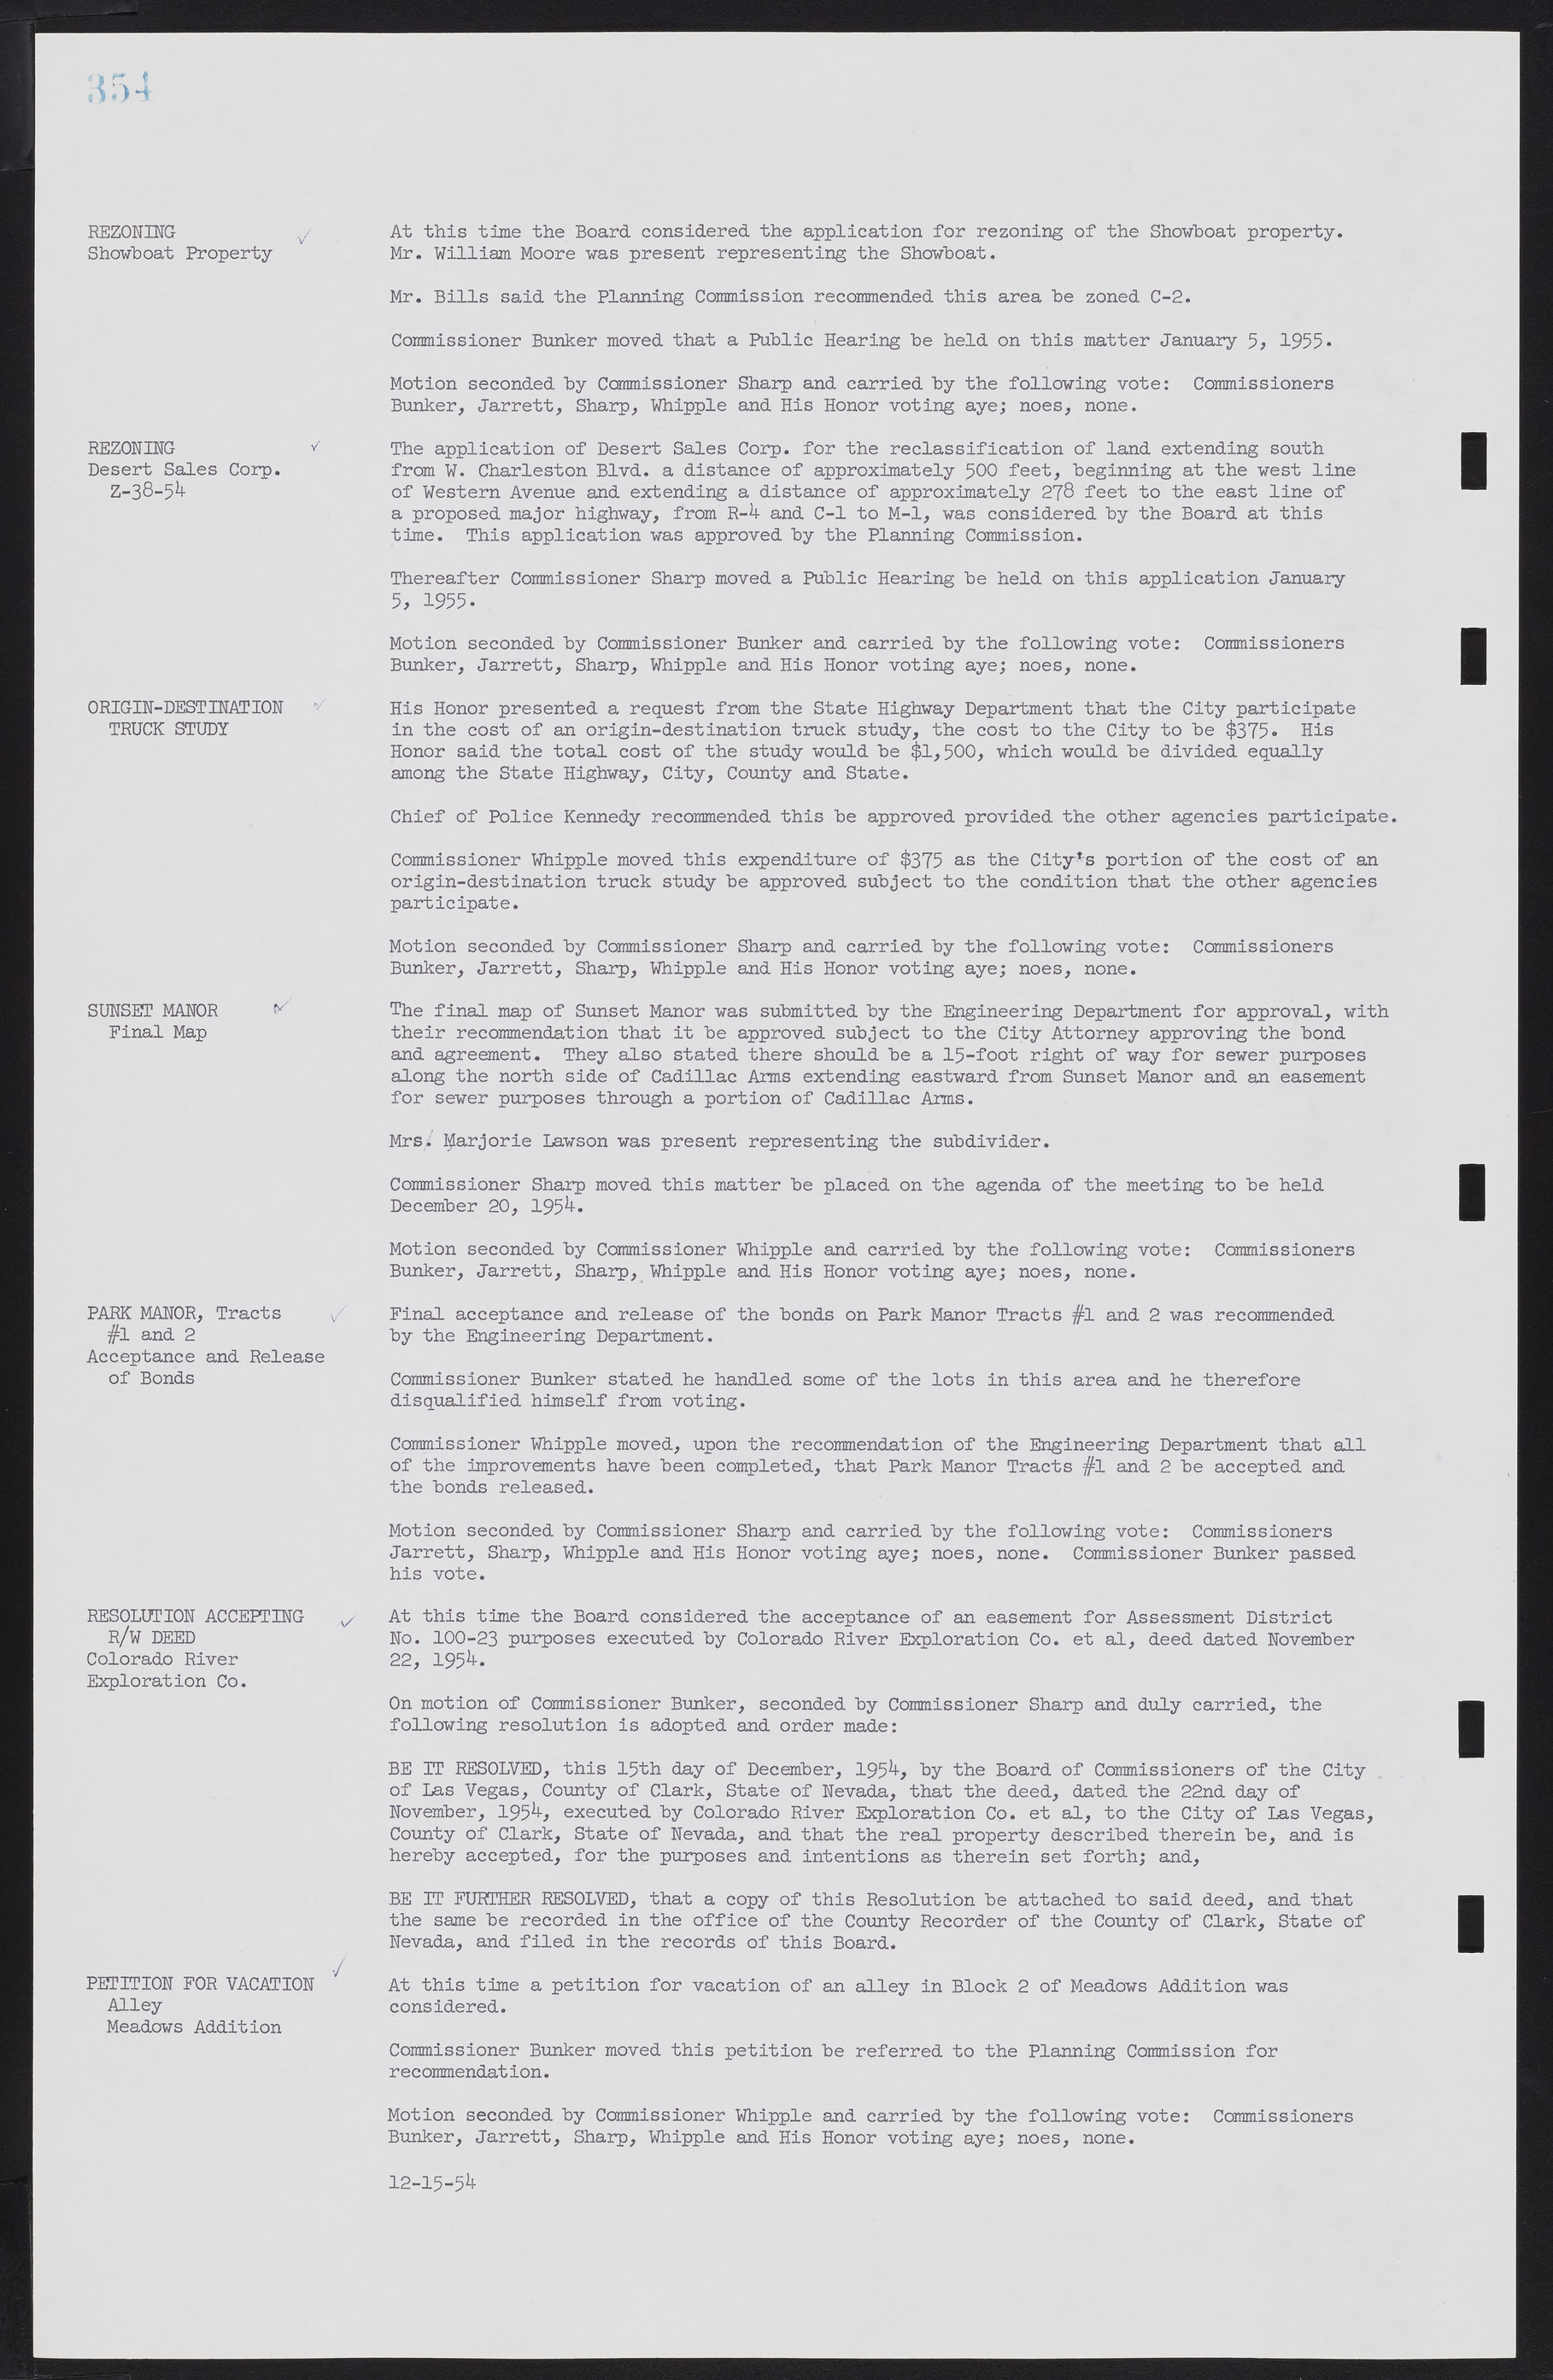 Las Vegas City Commission Minutes, February 17, 1954 to September 21, 1955, lvc000009-360